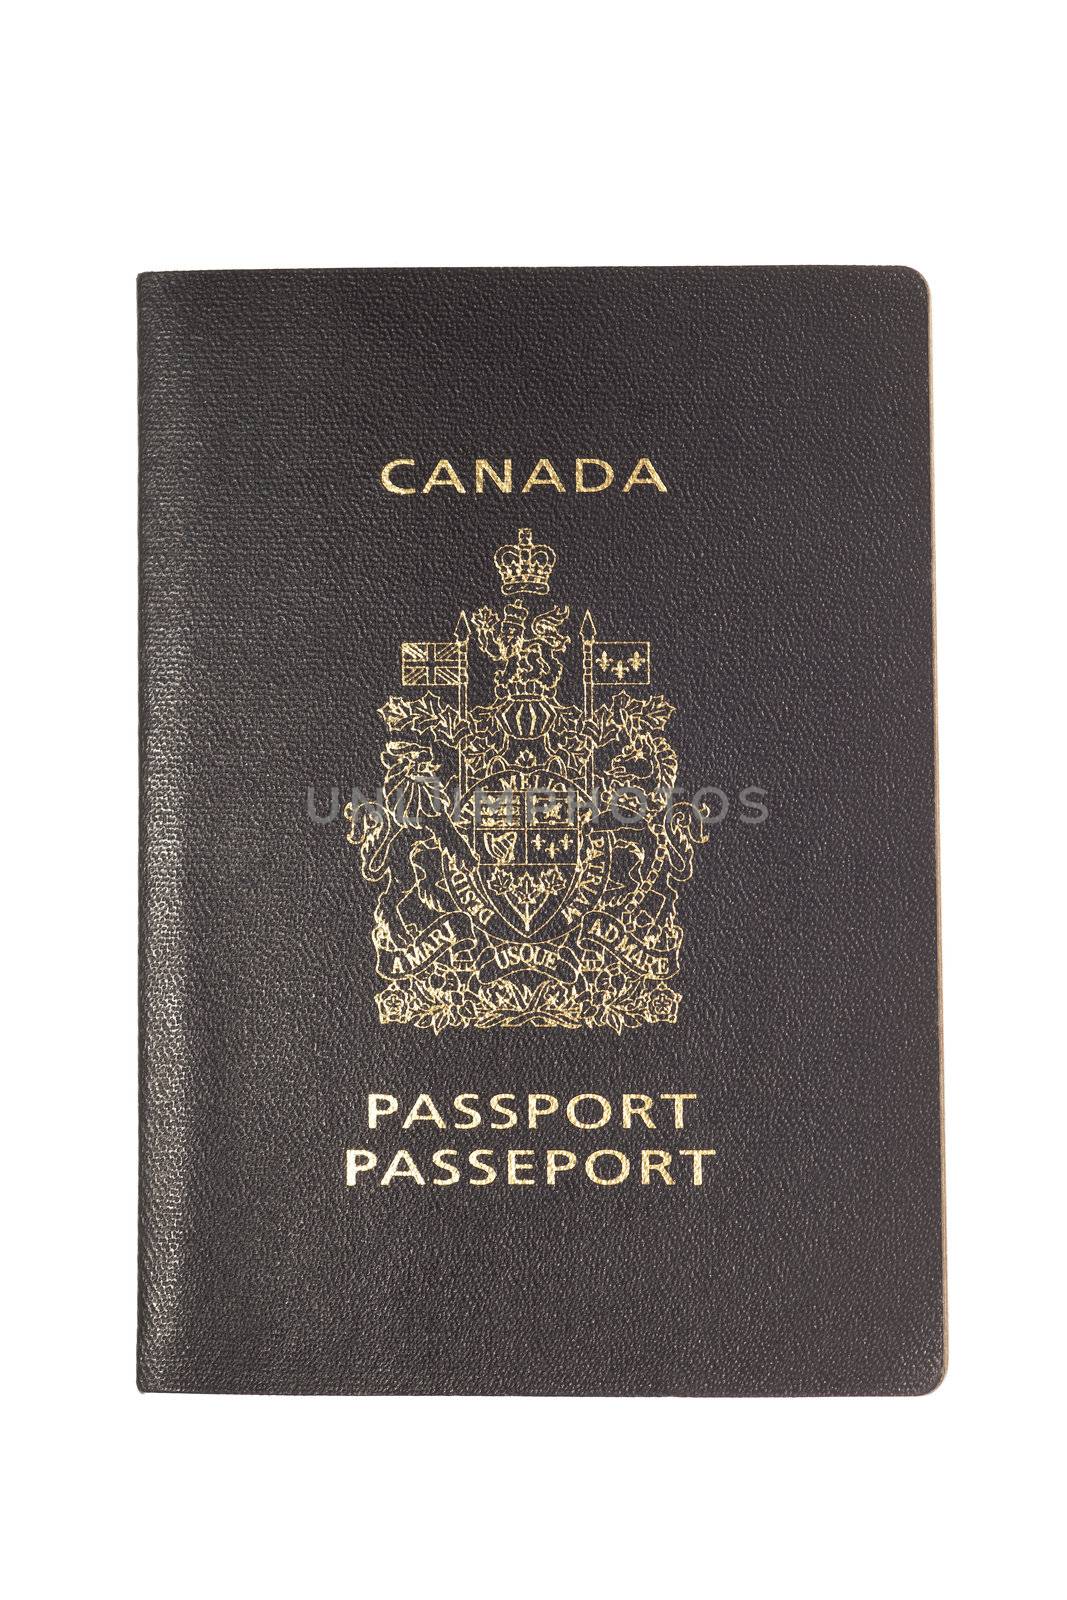 Canadian passport by PiLens